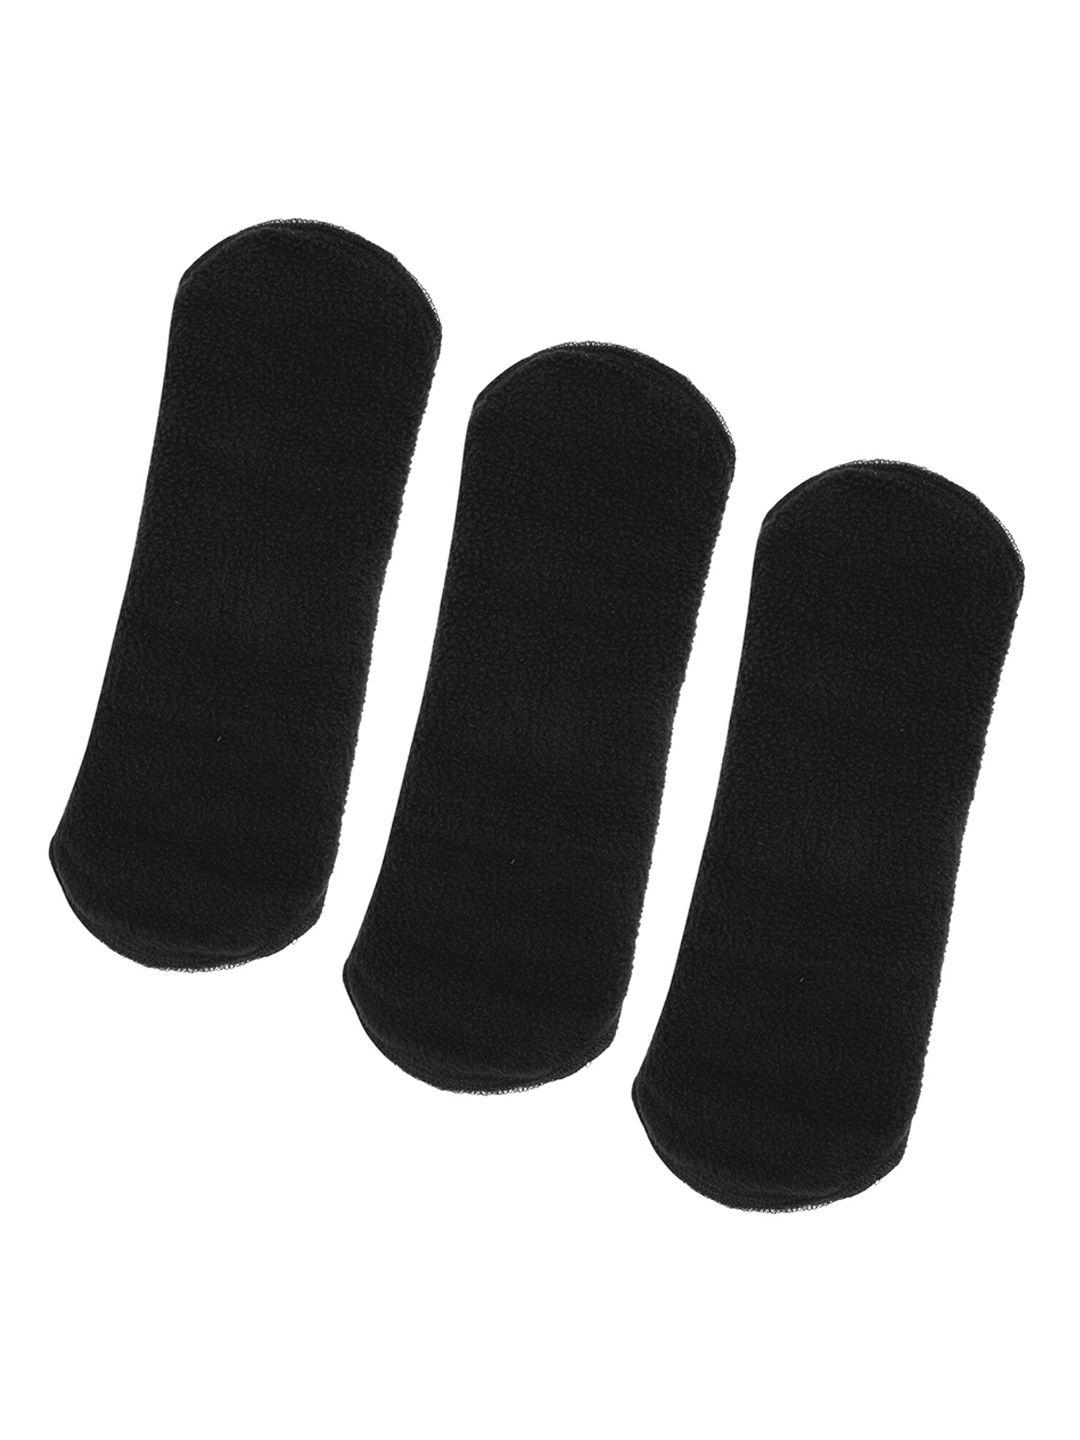 caredone set of 3 ultra thin 4-layered rash free reusable sanitary cloth pads - xl